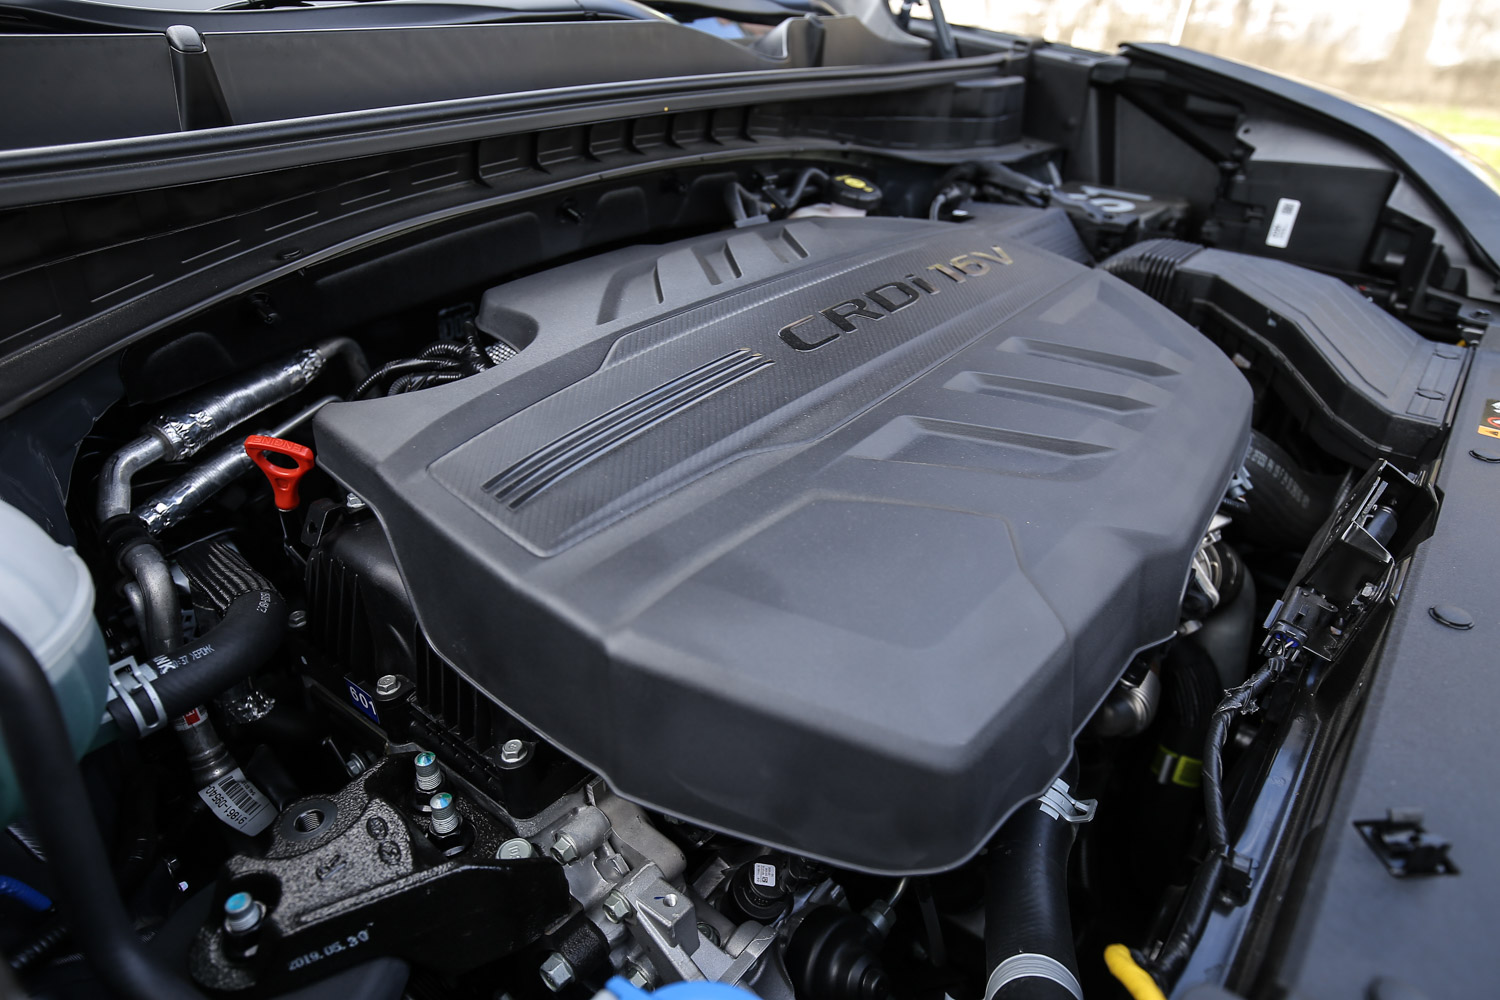 Sportage 搭載 2.0 升柴油引擎，具備 185ps/4000rpm 最大馬力與 41kgm/1750~2750rpm 最大扭力輸出。